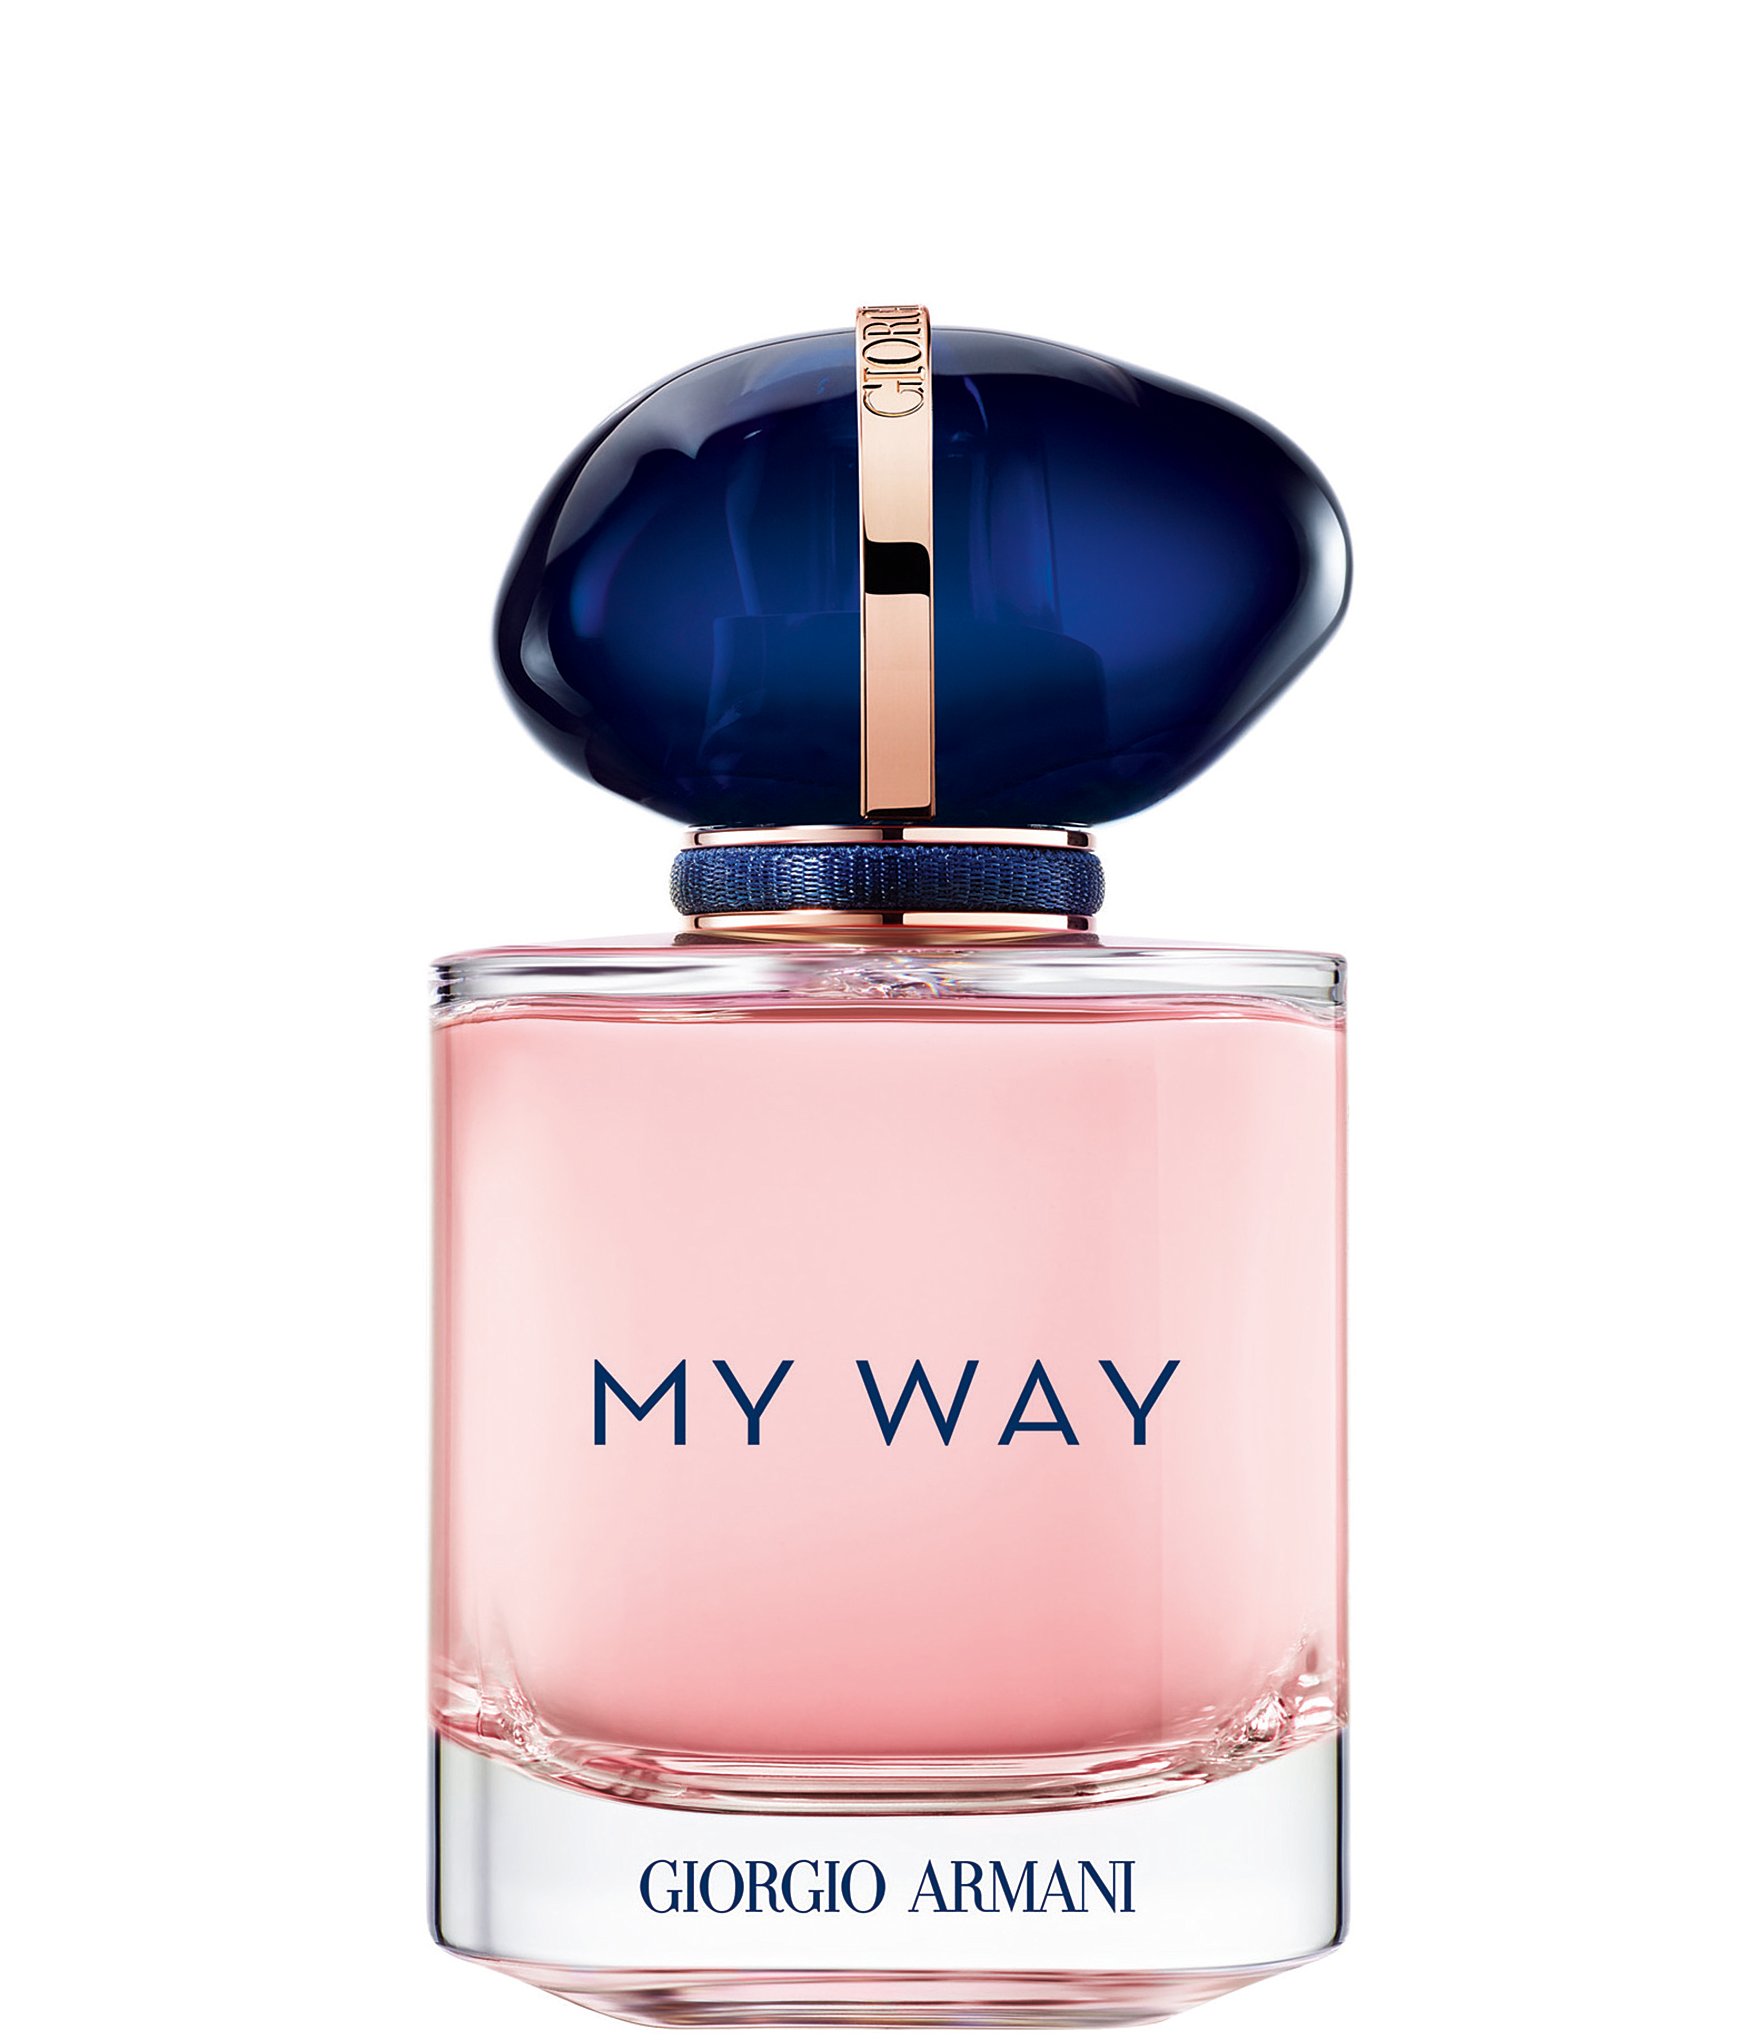 Giorgio Armani ARMANI beauty My Way Eau de Parfum Spray | Dillard's